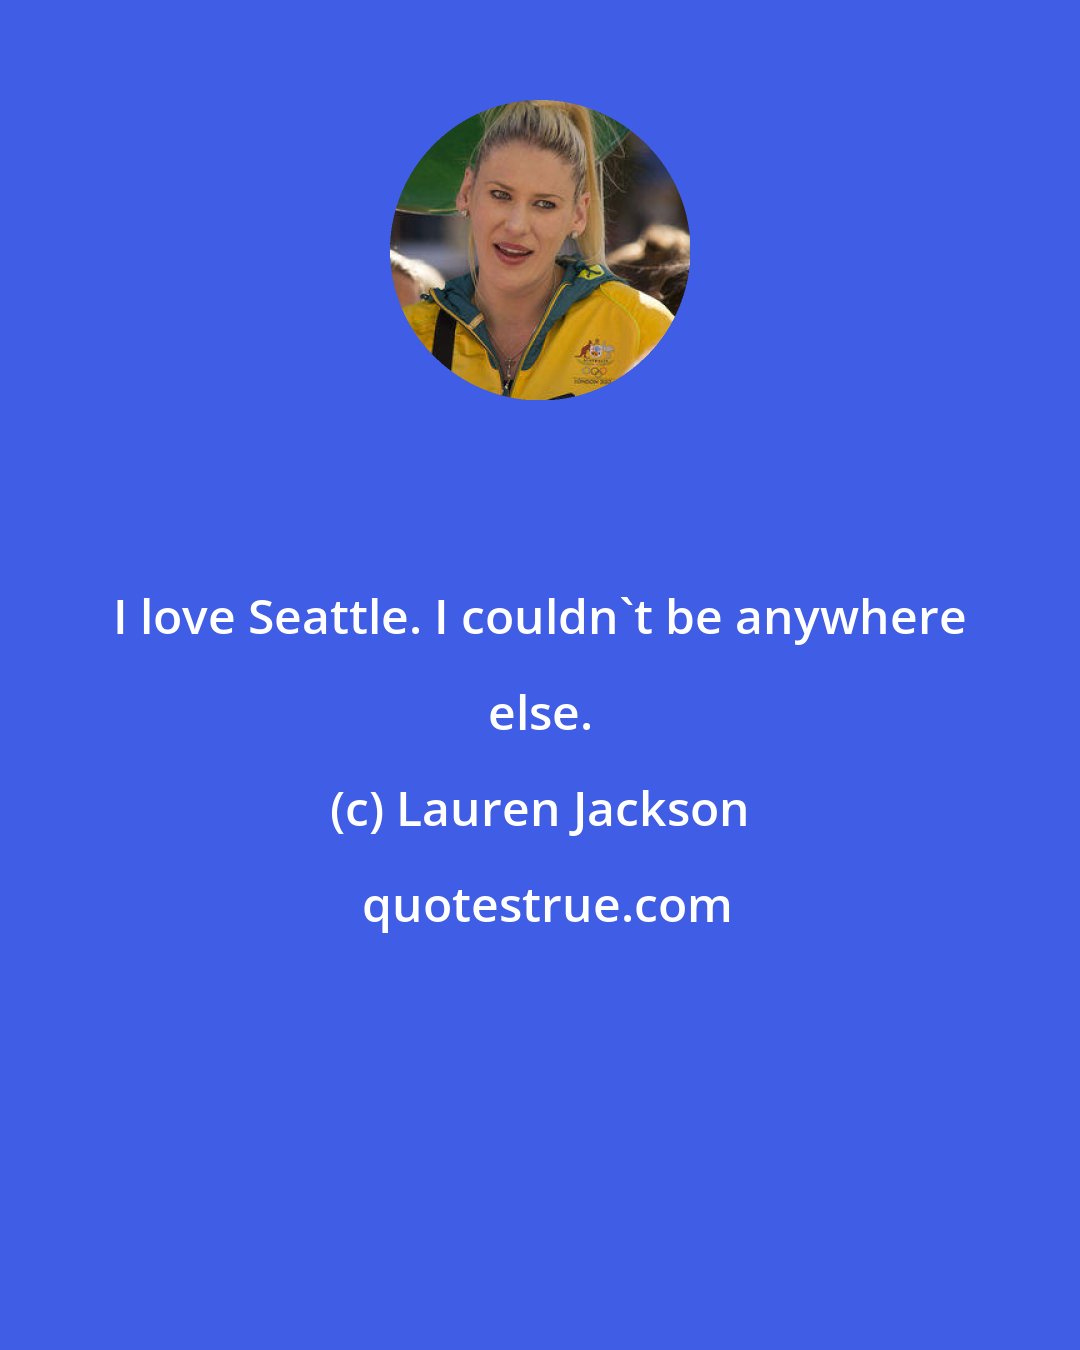 Lauren Jackson: I love Seattle. I couldn't be anywhere else.